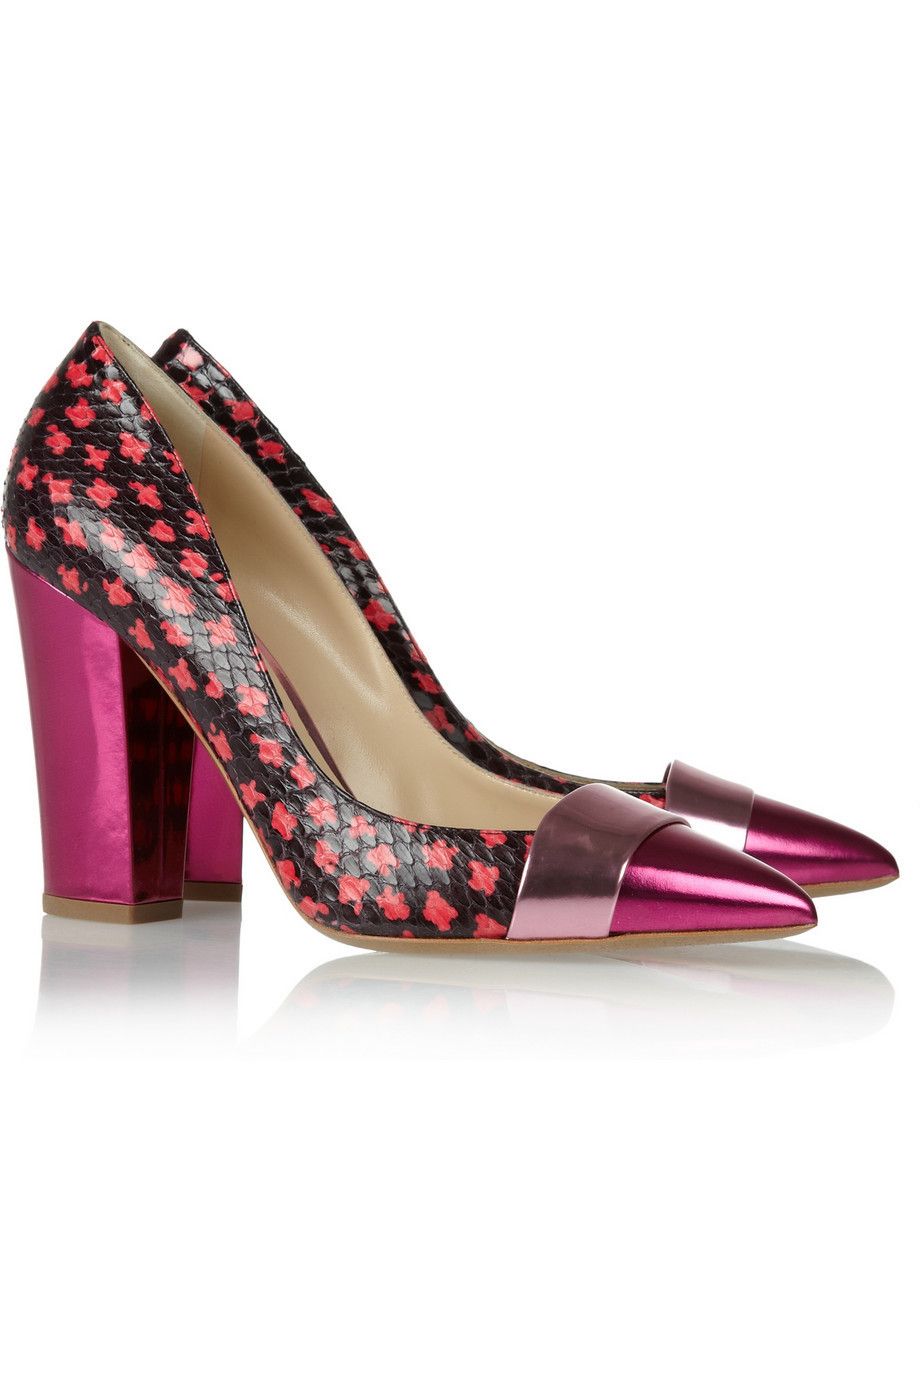 Footwear, High heels, Magenta, Pink, Purple, Basic pump, Violet, Sandal, Carmine, Fashion, 